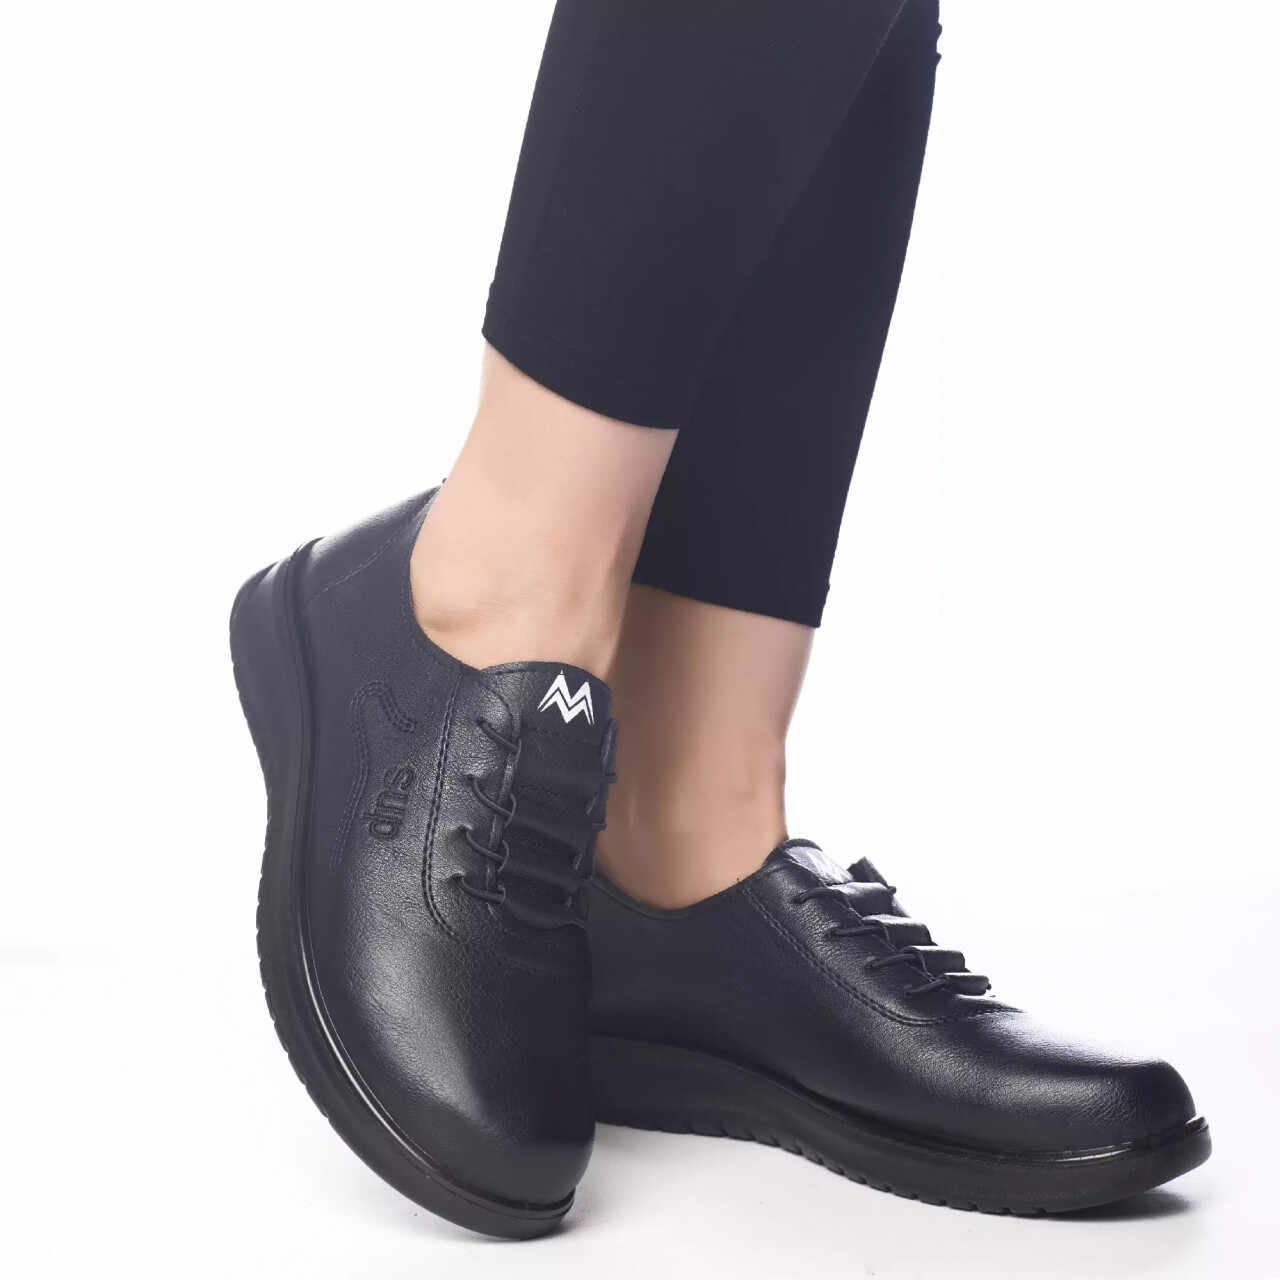 Pantofi casual kaina negru piele ecologica